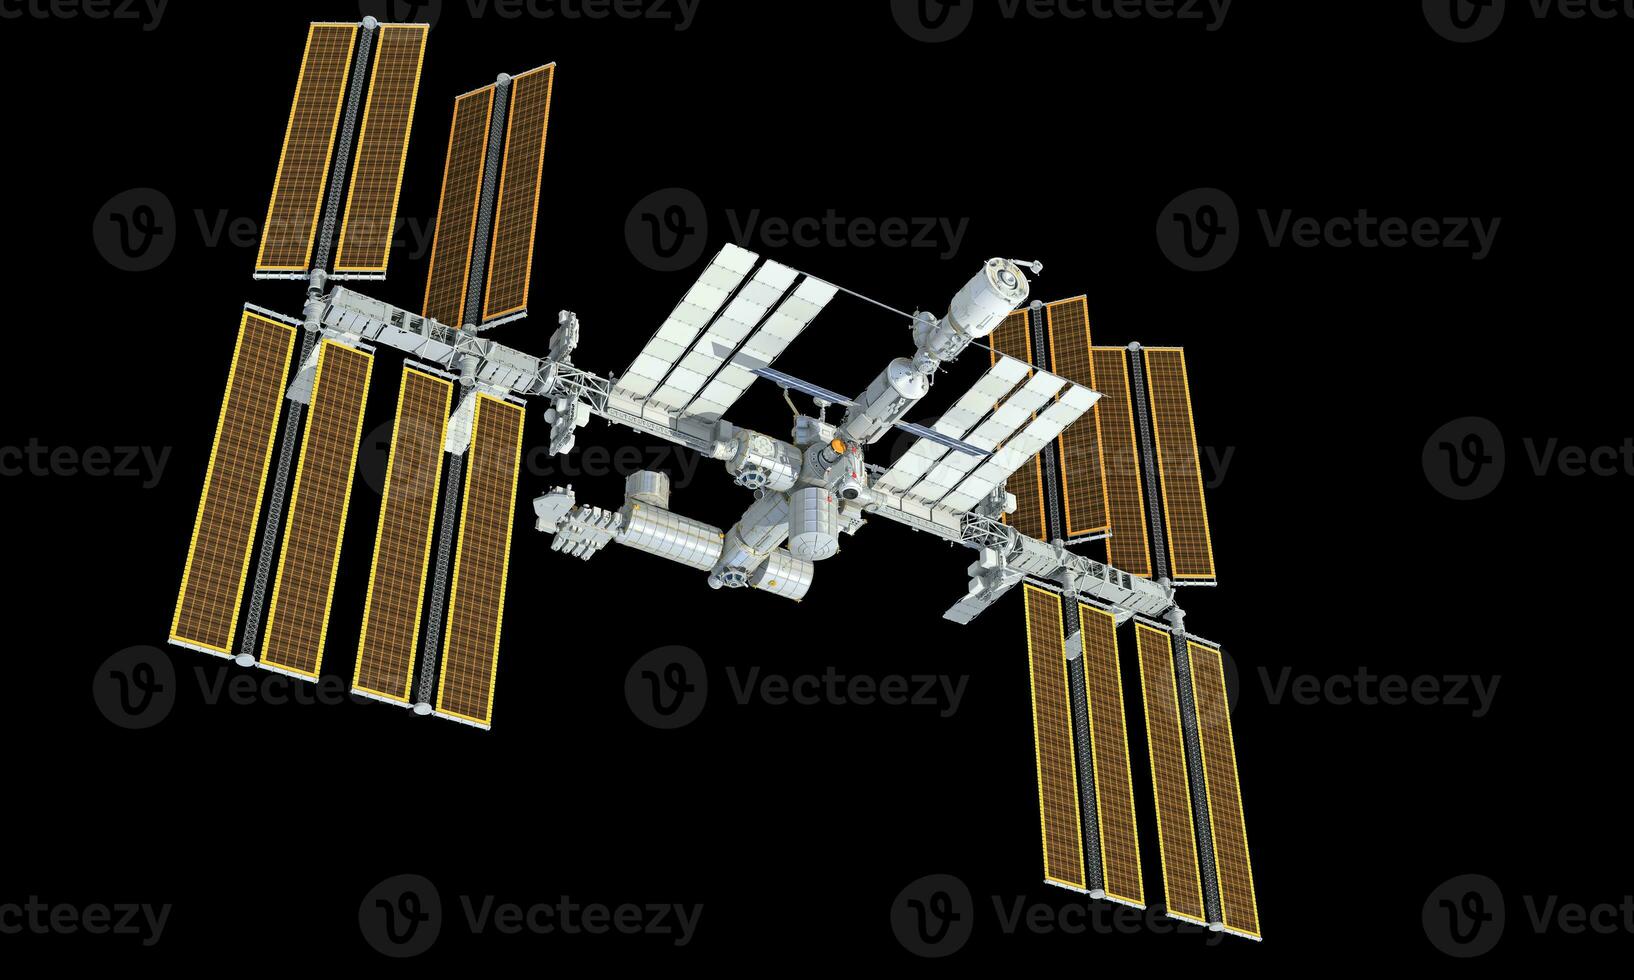 internacional espacio estación iss 3d representación en negro antecedentes foto